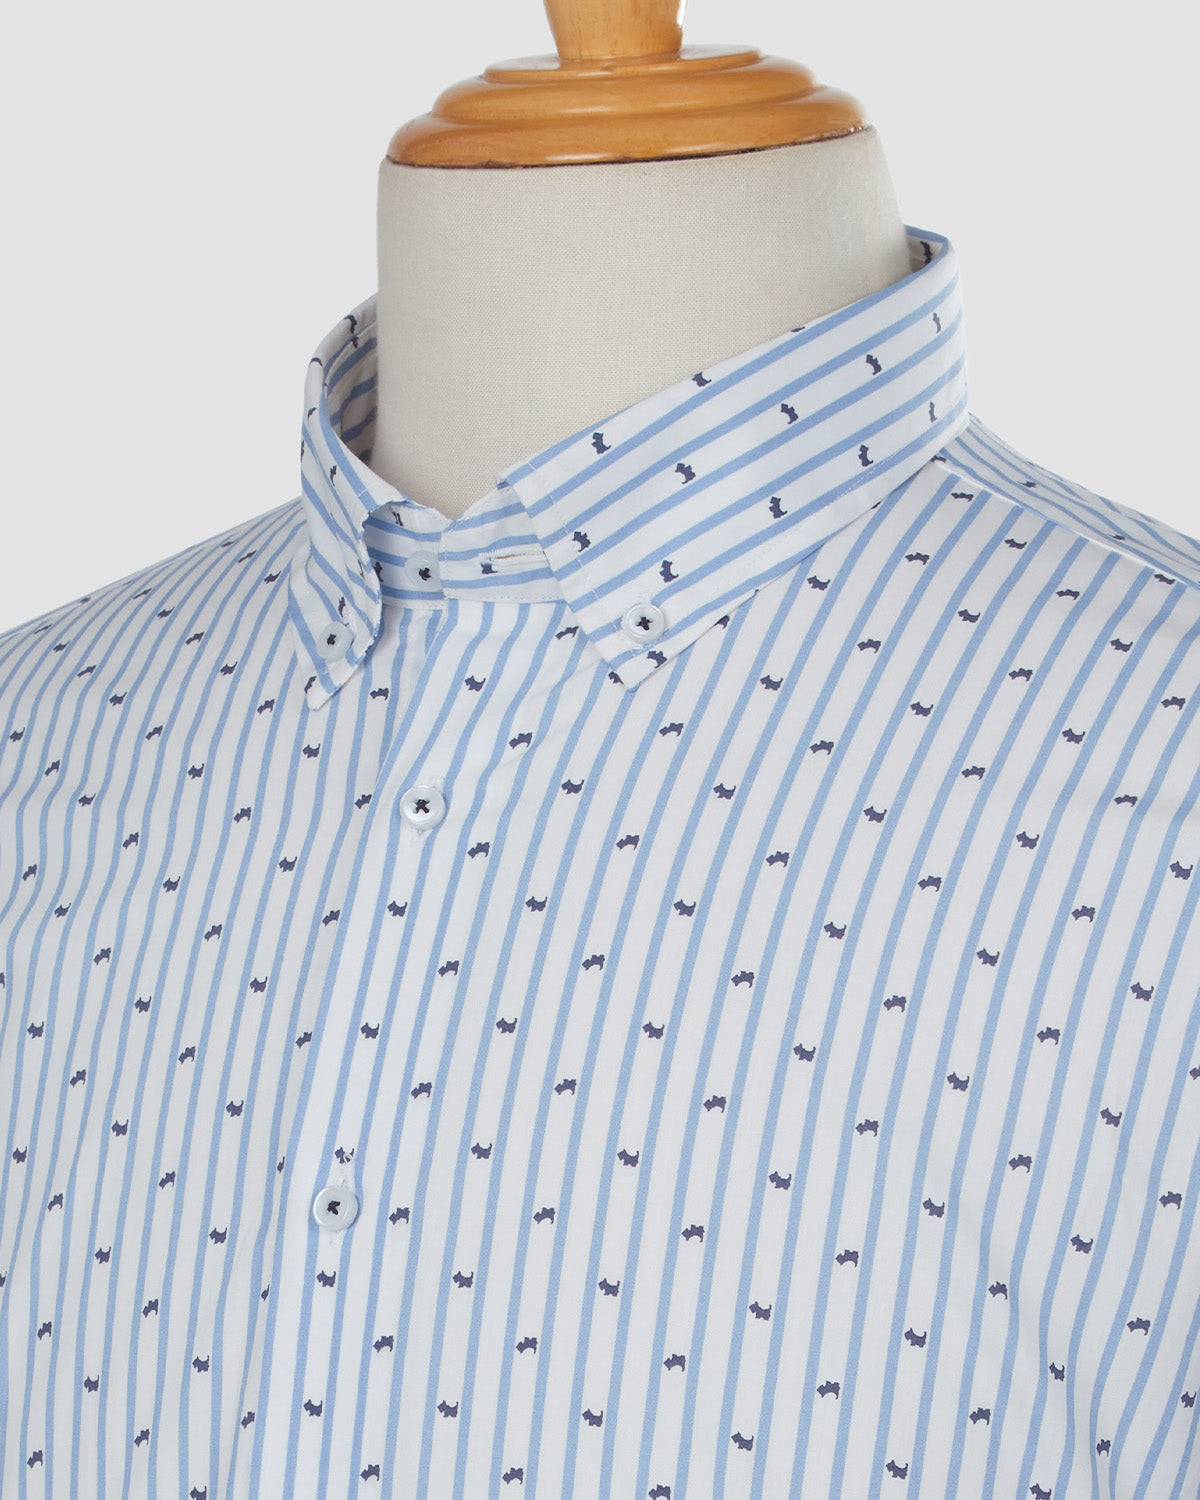 Bombay Shirt Company - Blue Flake Striped Shirt